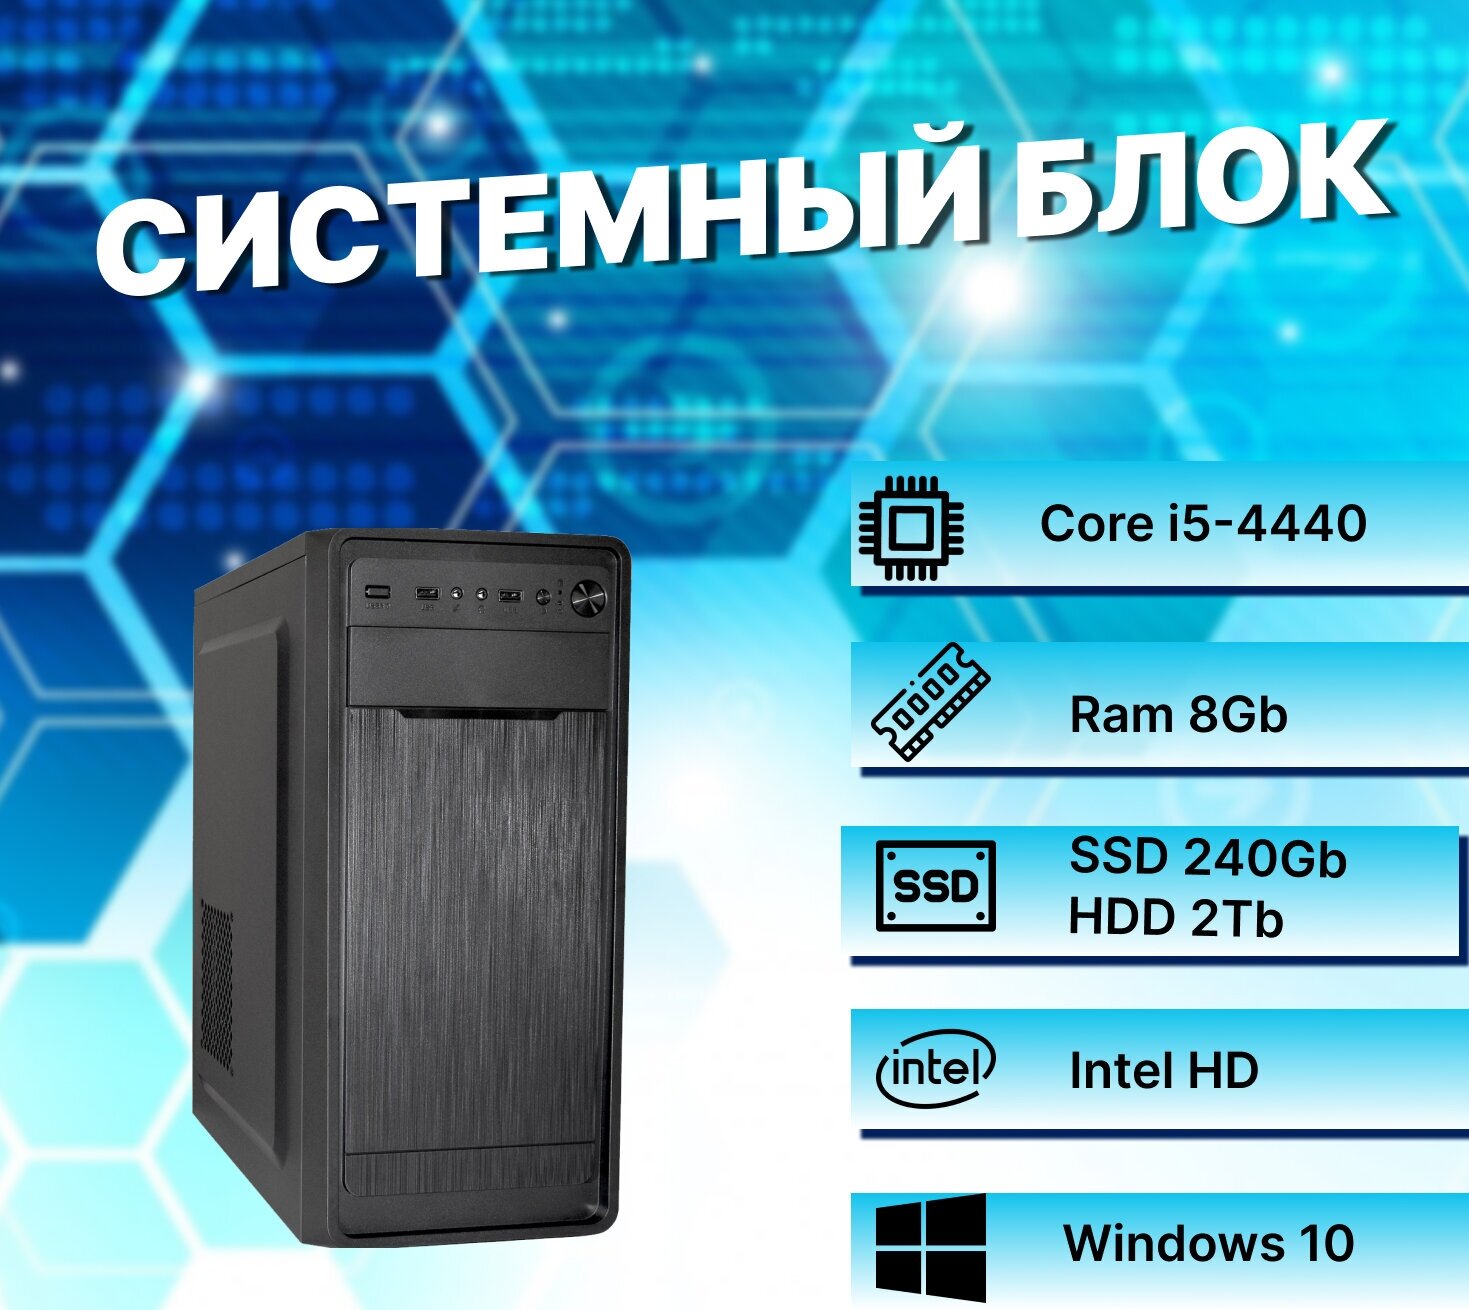 Системный блок Intel Core i5-4440 (3.1ГГц)/ RAM 8Gb/ SSD 240Gb/HDD 2Tb/ Intel HD/ Windows 10 Pro